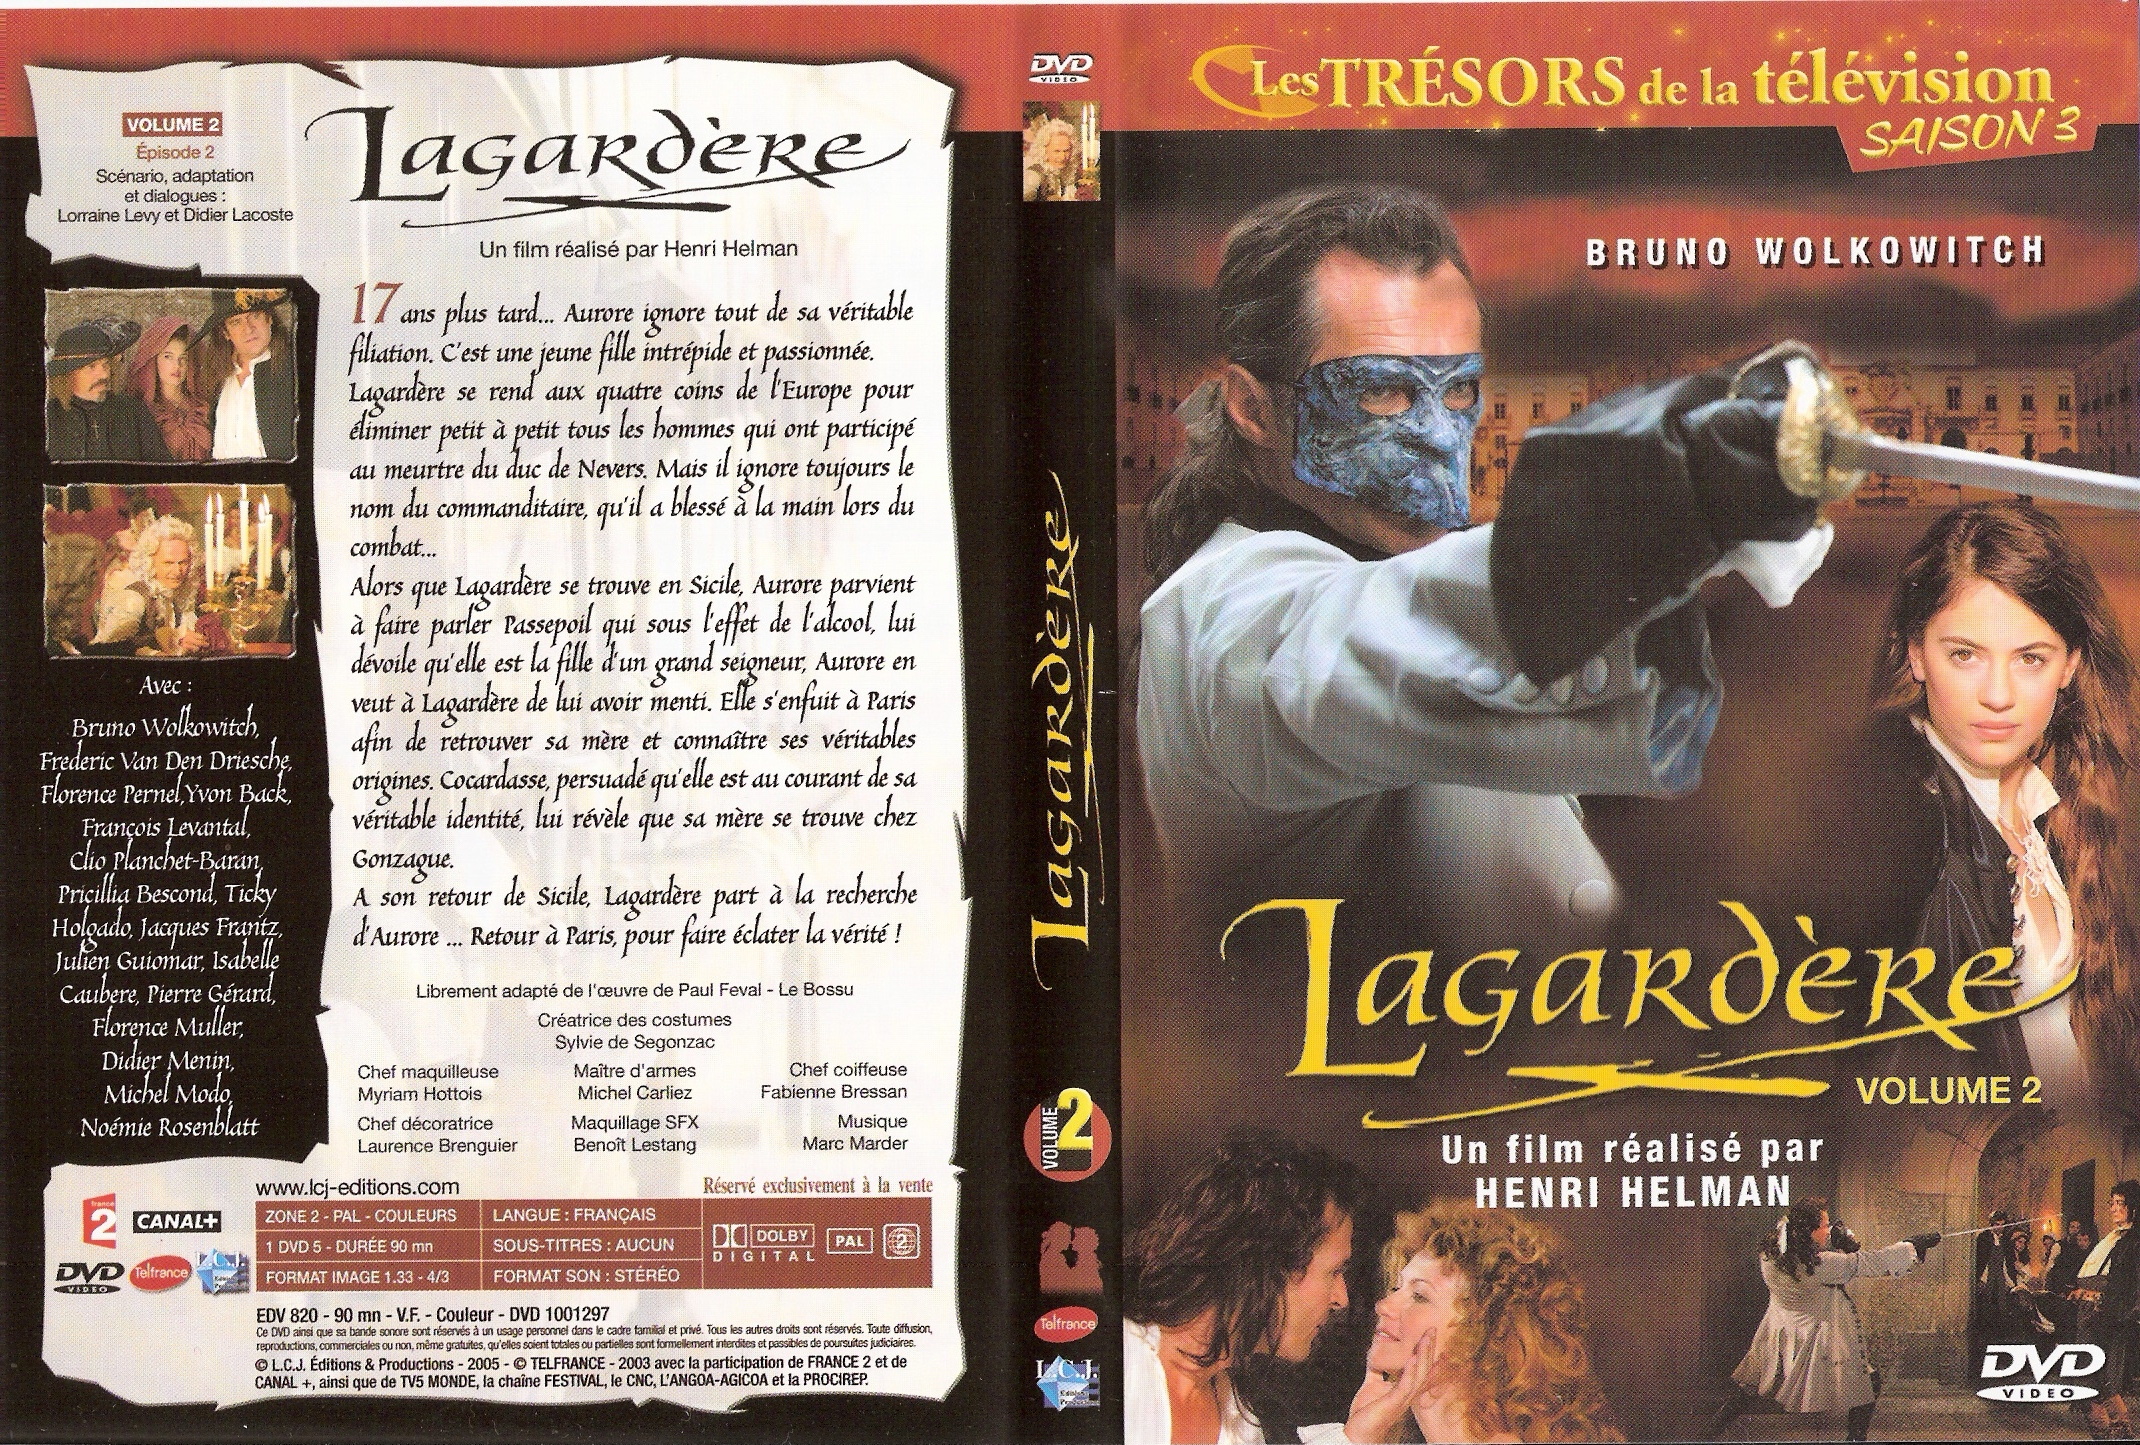 Jaquette DVD Lagardre vol 2